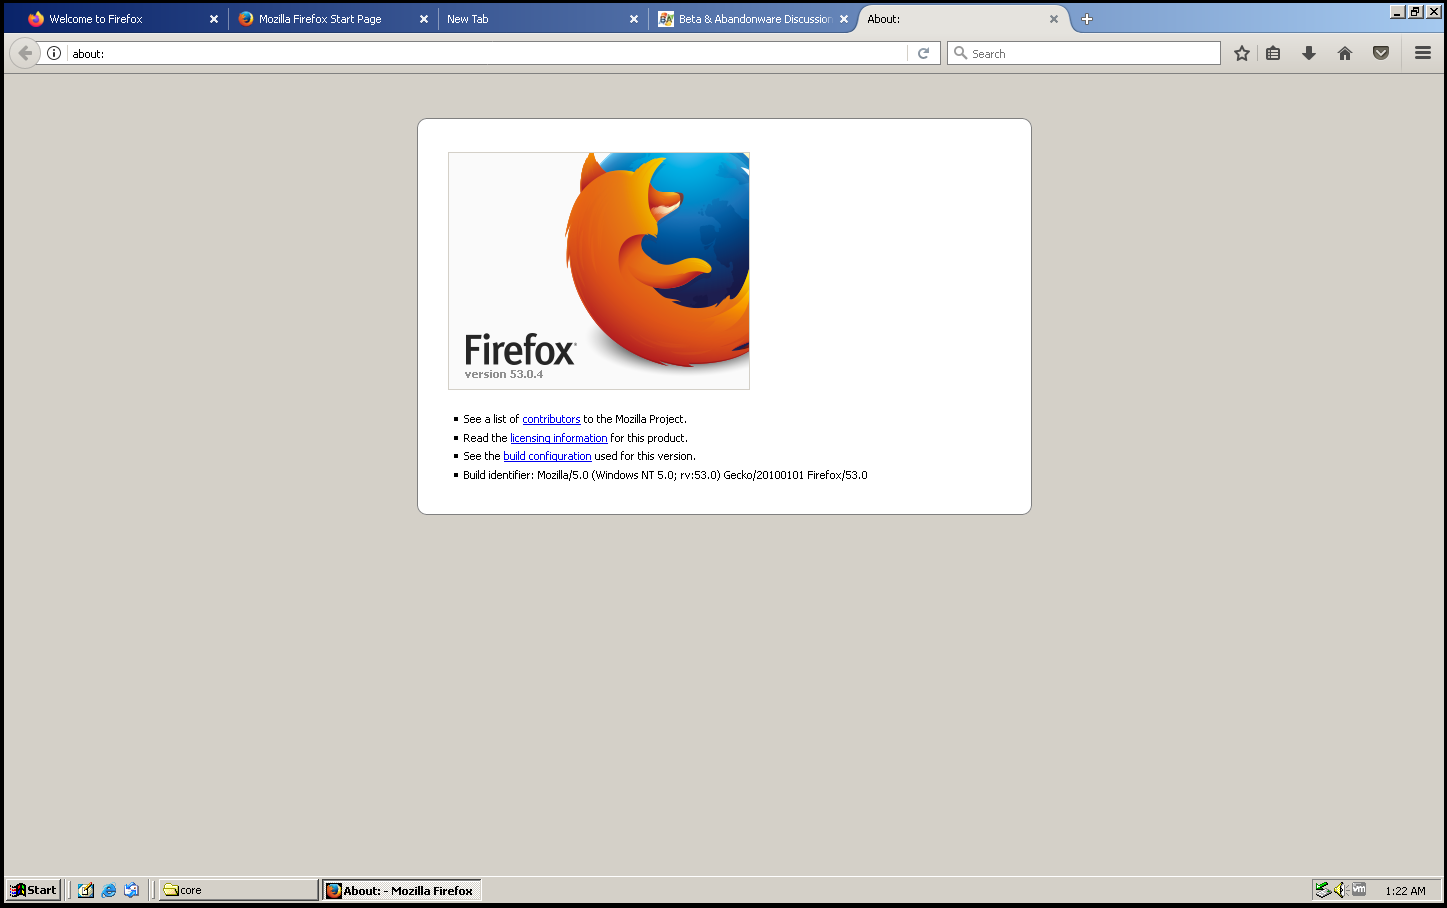 firefox windows 2000 download